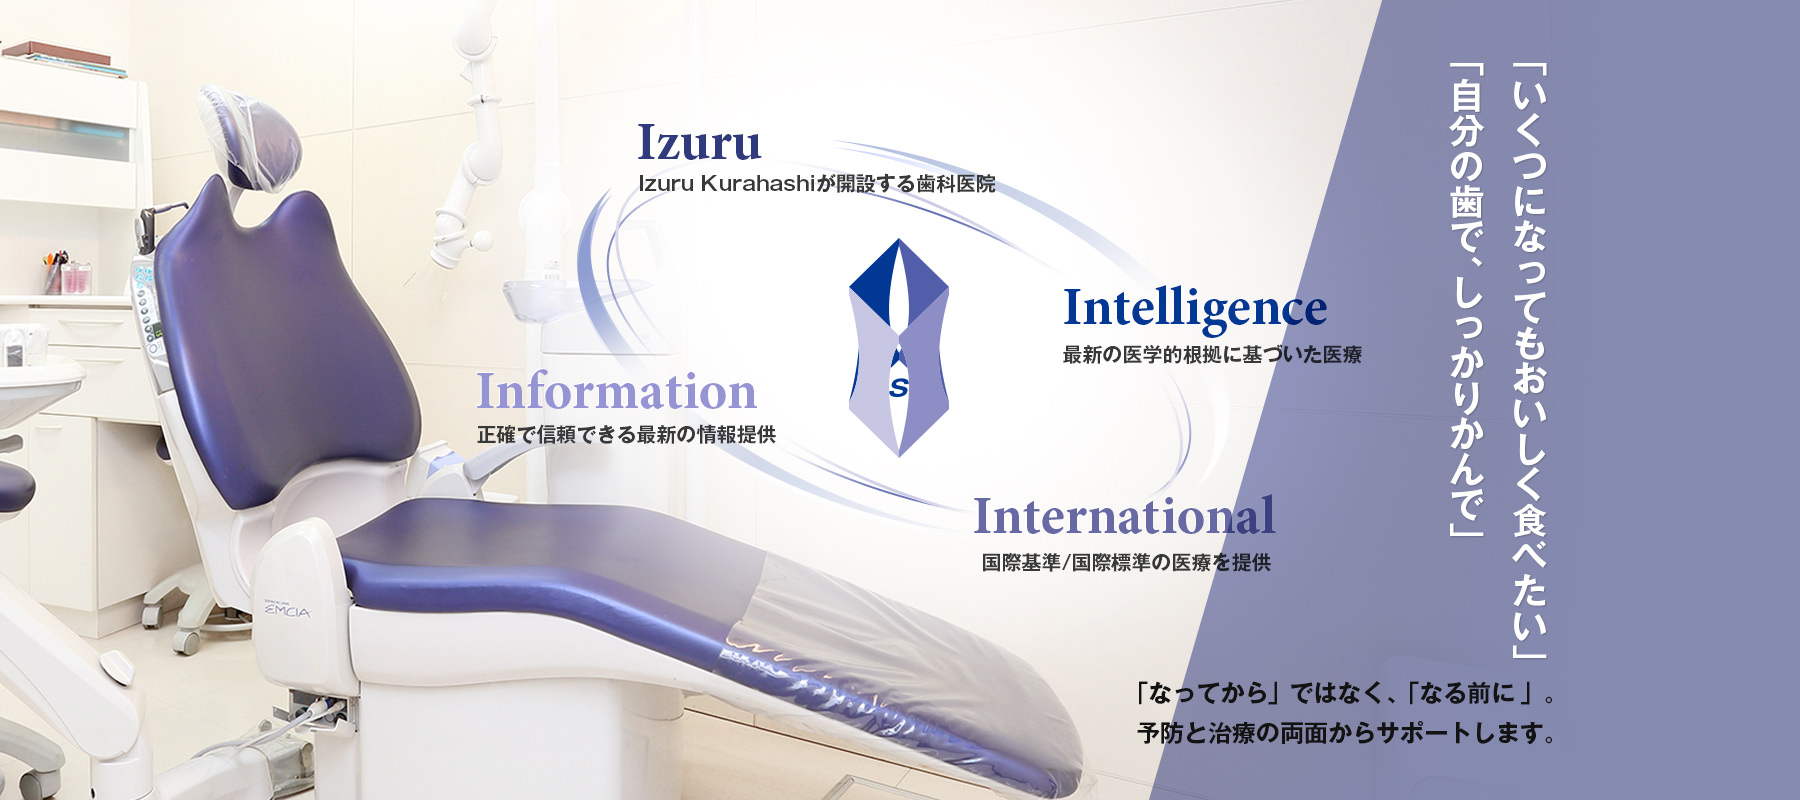 Izuru  Izuru Kurahashiが開設する歯科医院　Information 正確で信頼できる最新の情報提供　Intelligence 最新の医学的根拠に基づいた医療　International 国際基準/国際標準の医療を提供　「なってから」ではなく、「なる前に」。予防と治療の両面からサポートします。「いくつになってもおいしく食べたい」「自分の歯で、しっかりかんで」